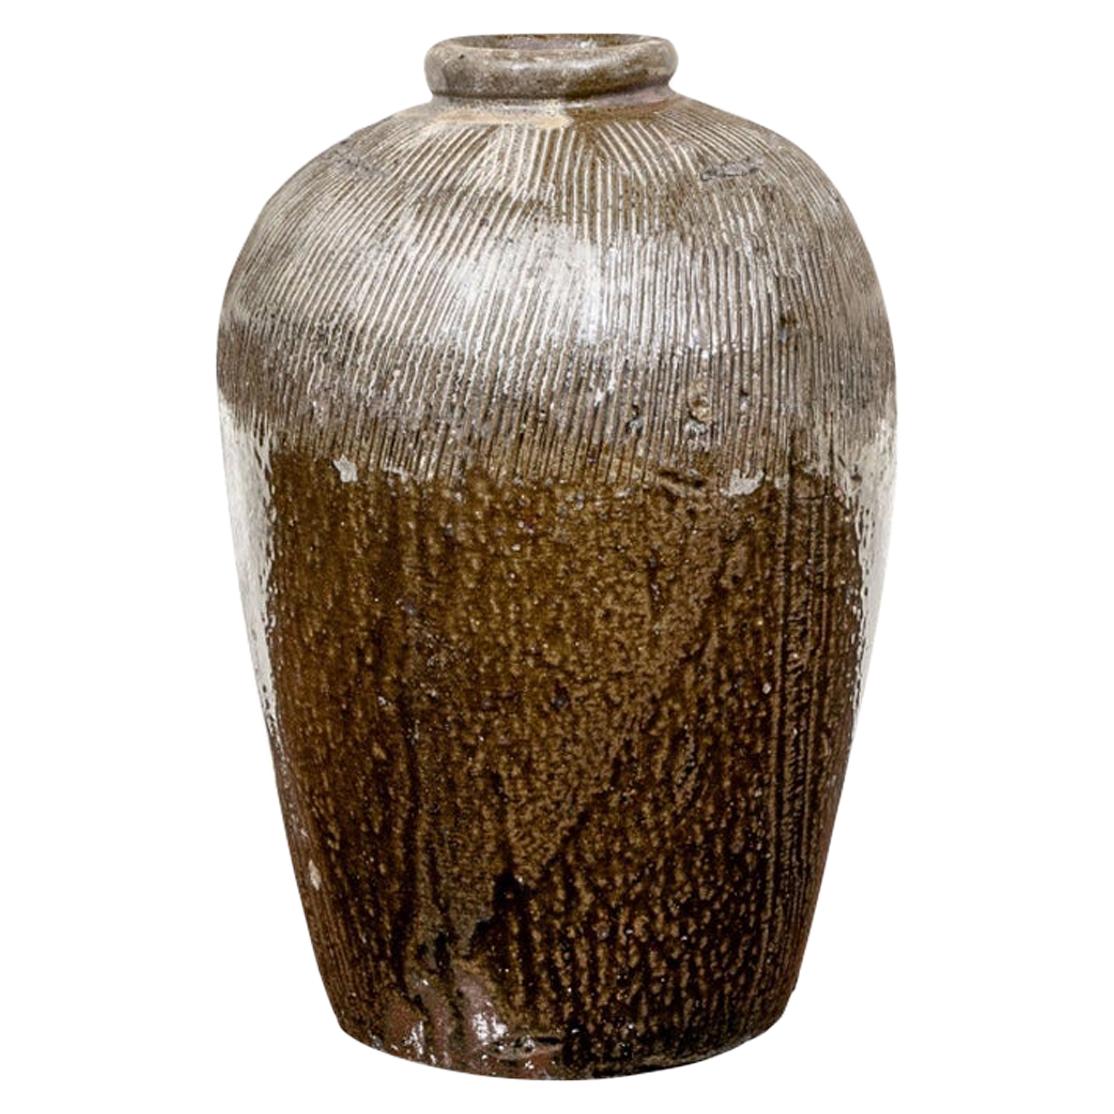 Large Glazed Ceramic Jar from Bunny Williams' Trelliage Shop